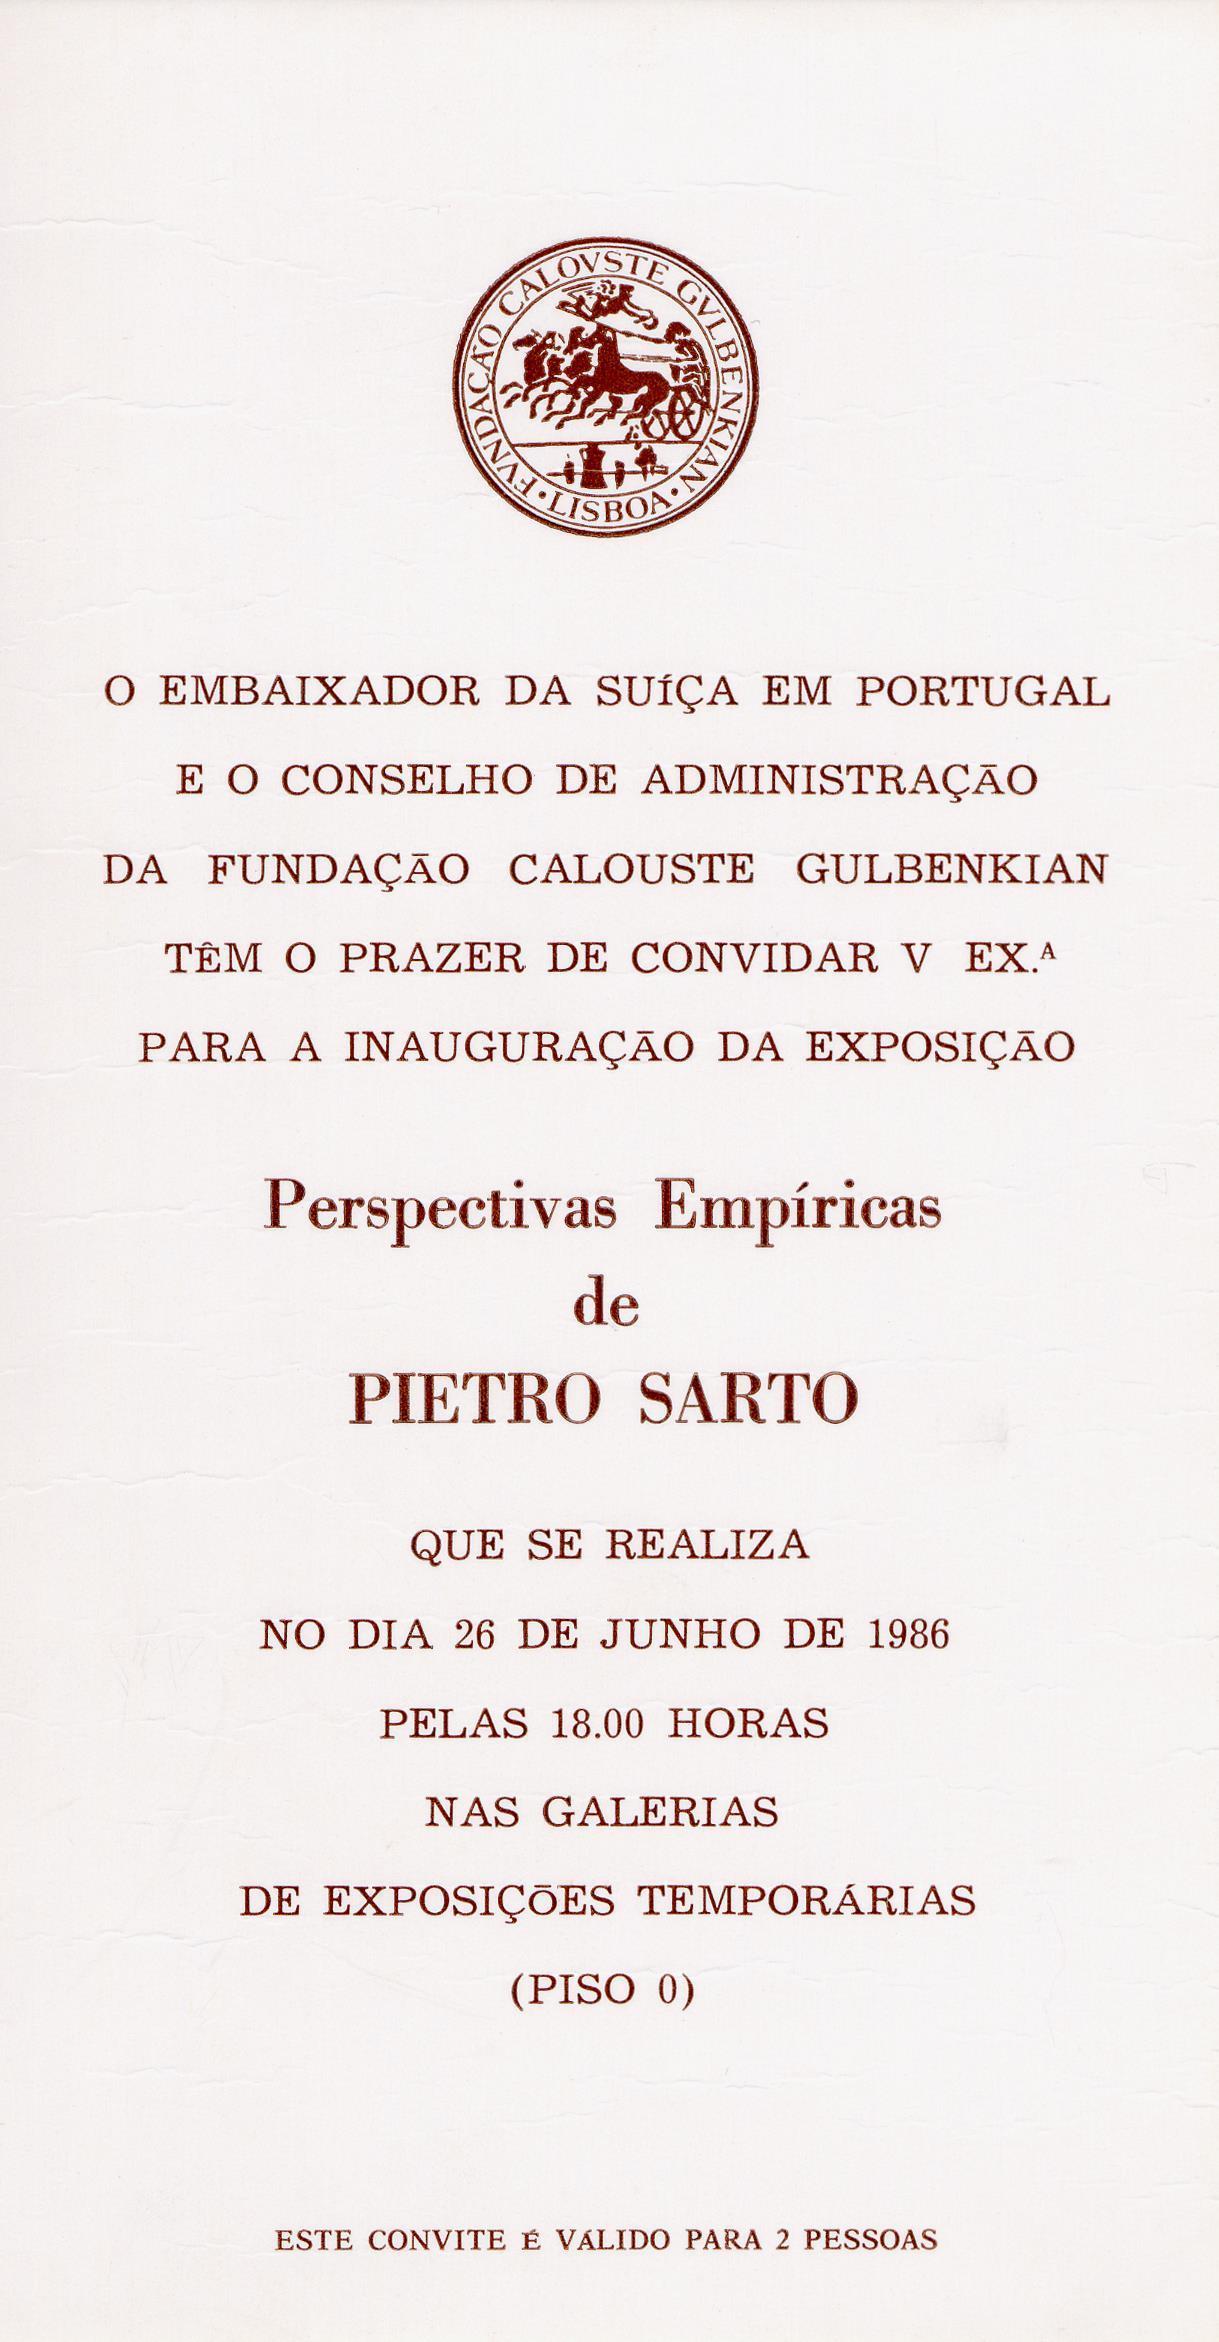 Pietro Sarto. Perspectivas Empíricas